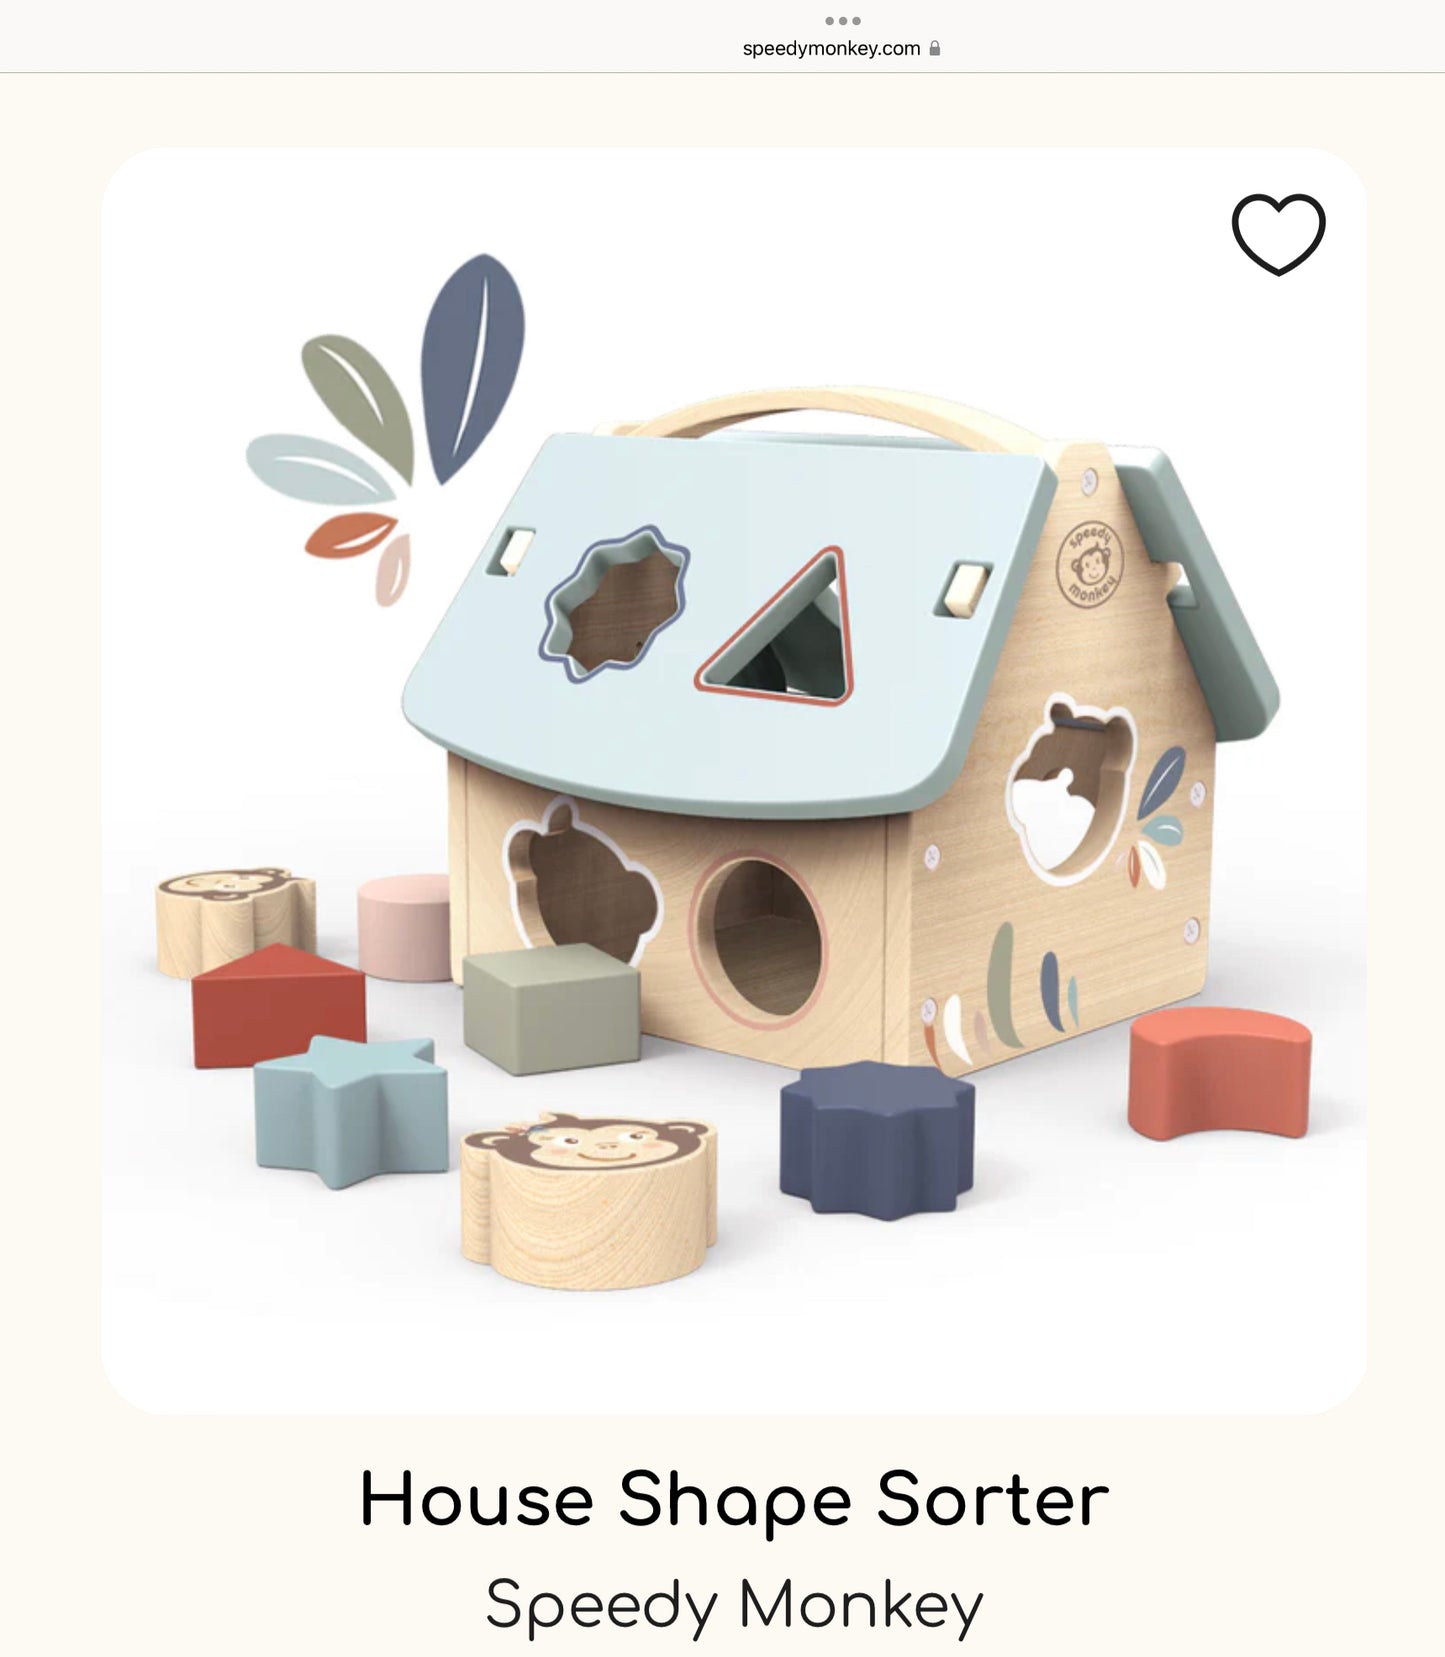 House shape sorter